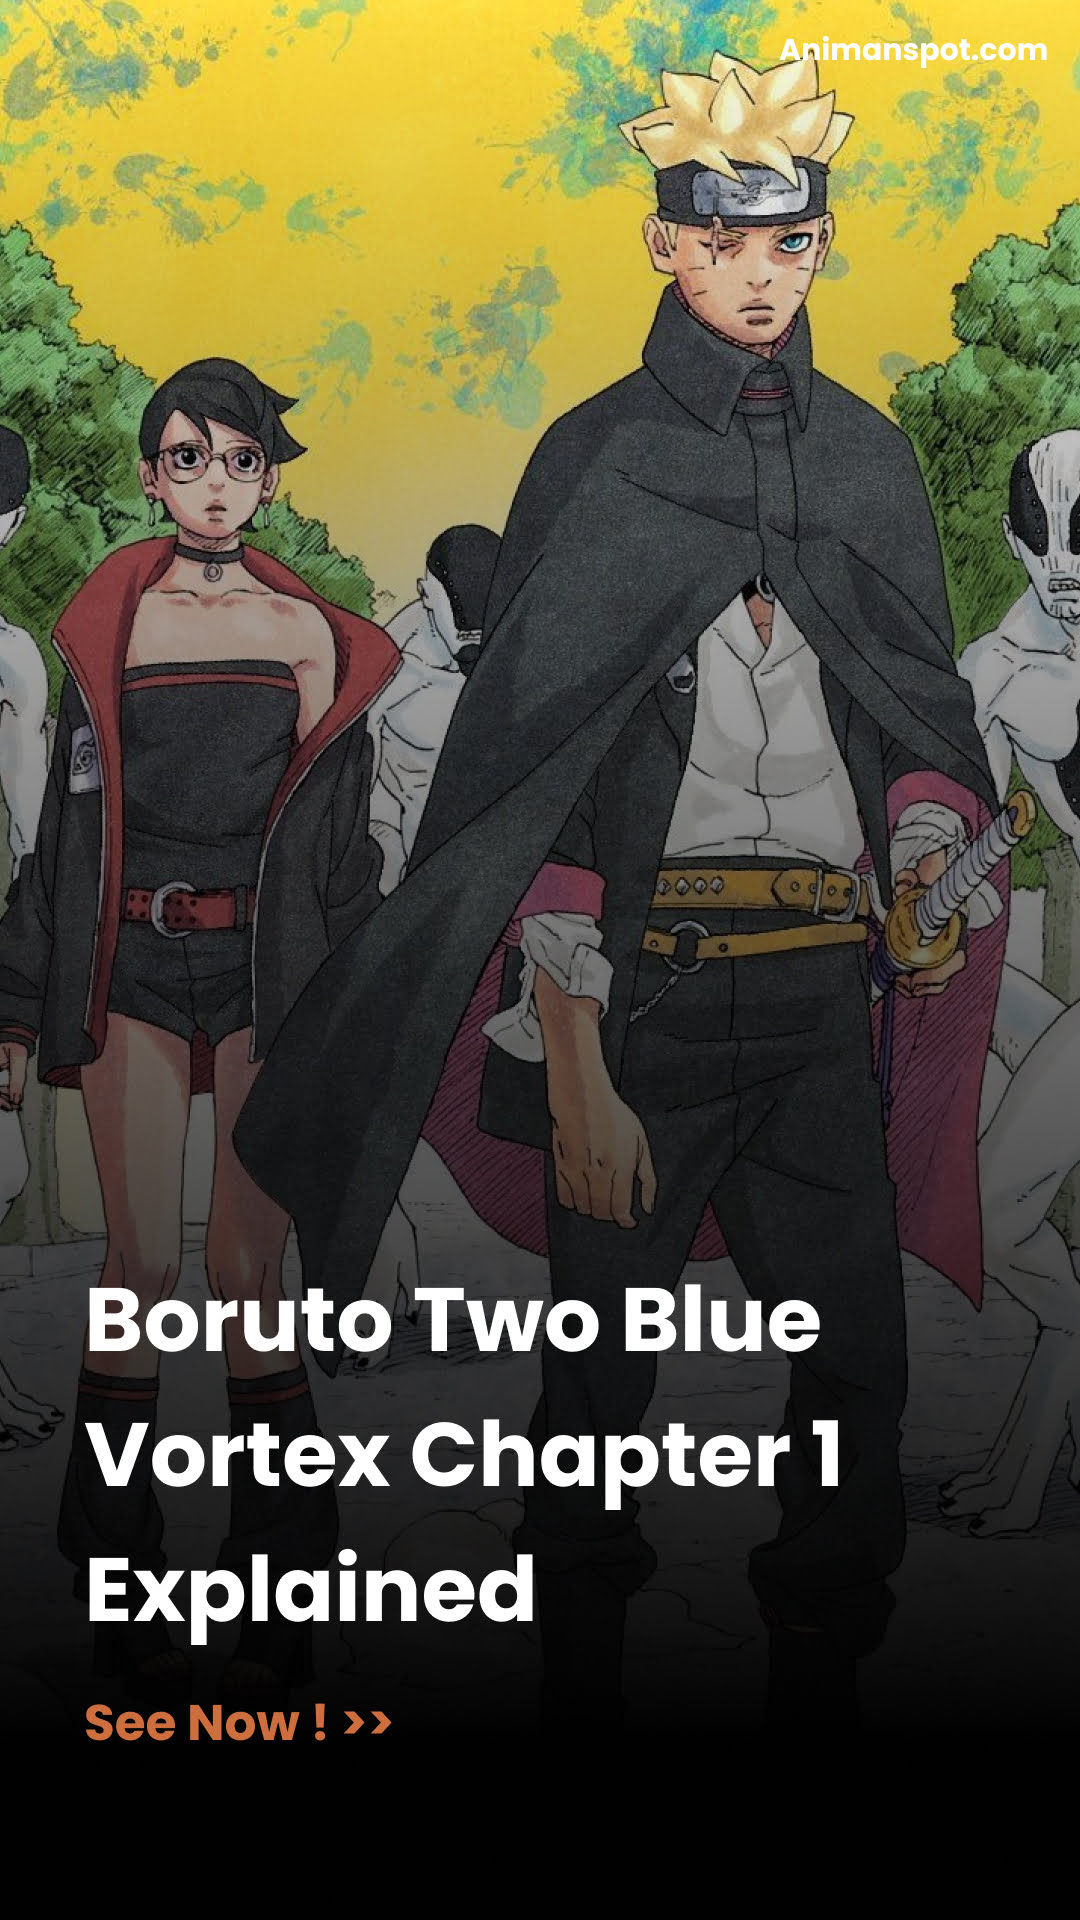 Boruto: Two Blue Vortex Chapter 1 - The Post-Timeskip Begins